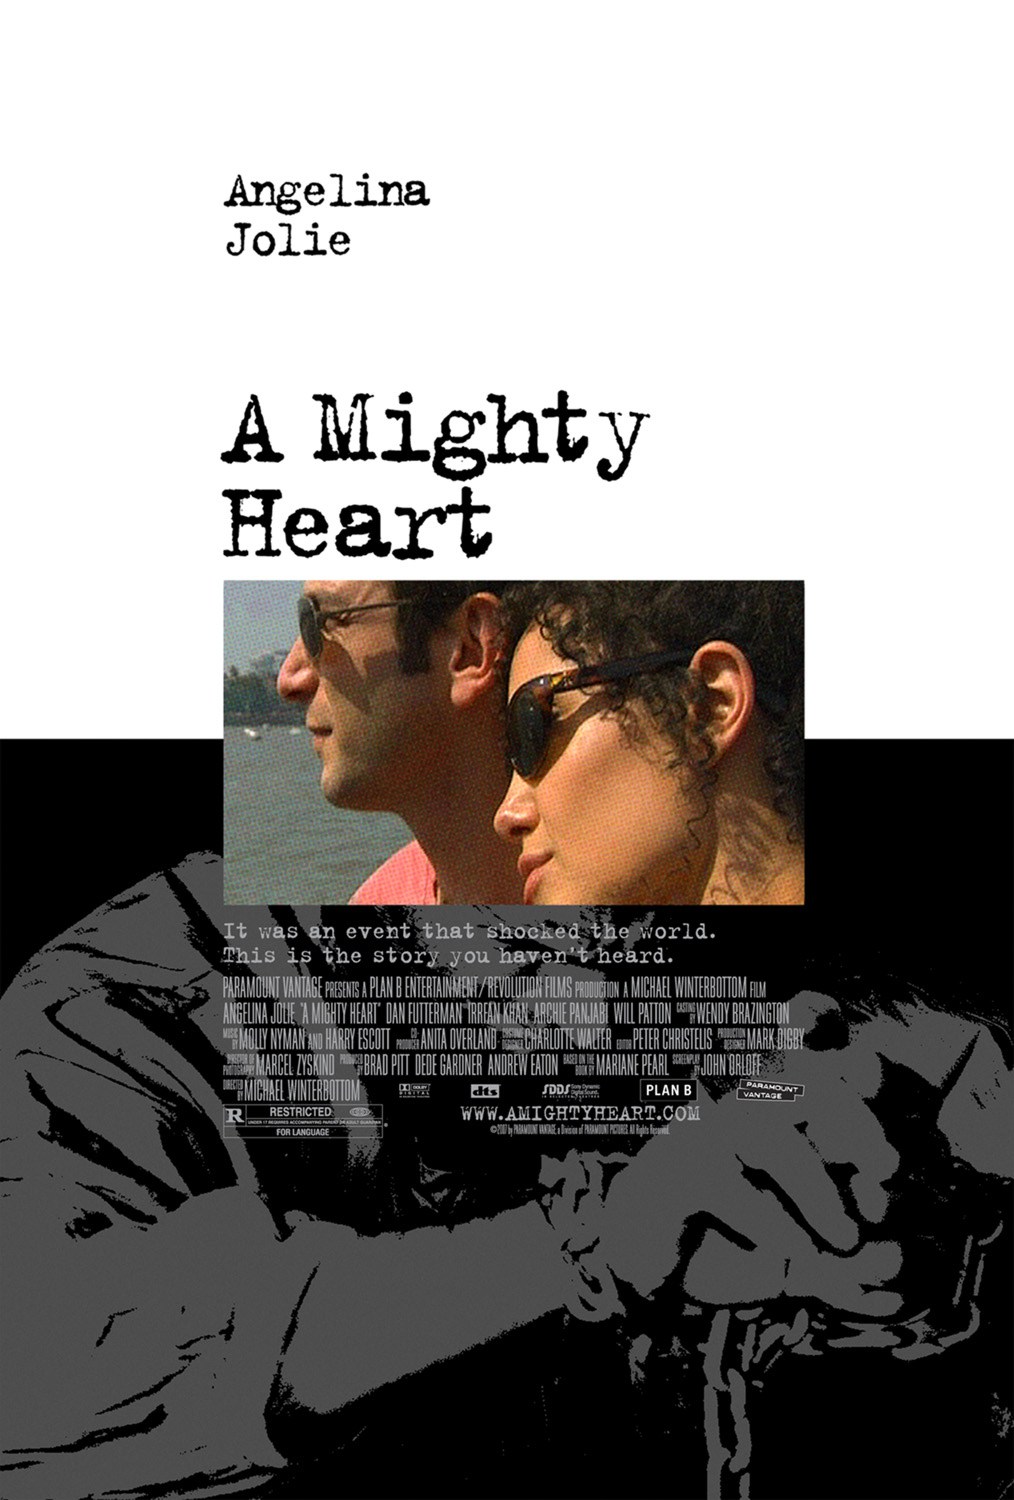 [a+mighty+heart.jpg]